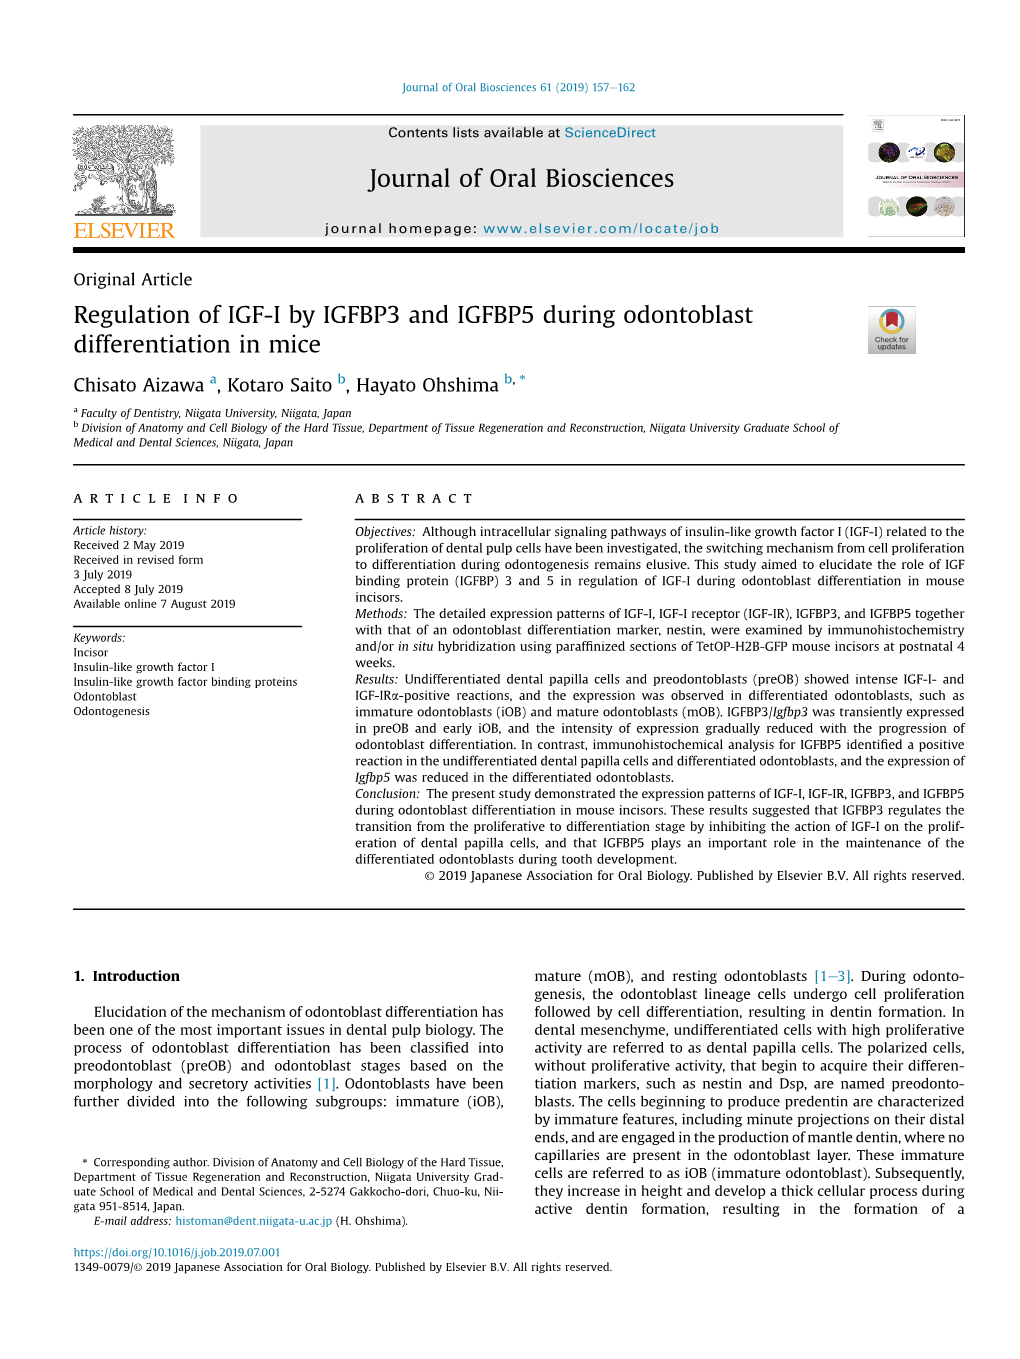 Regulation of IGF-I by IGFBP3 and IGFBP5 During Odontoblast Differentiation in Mice